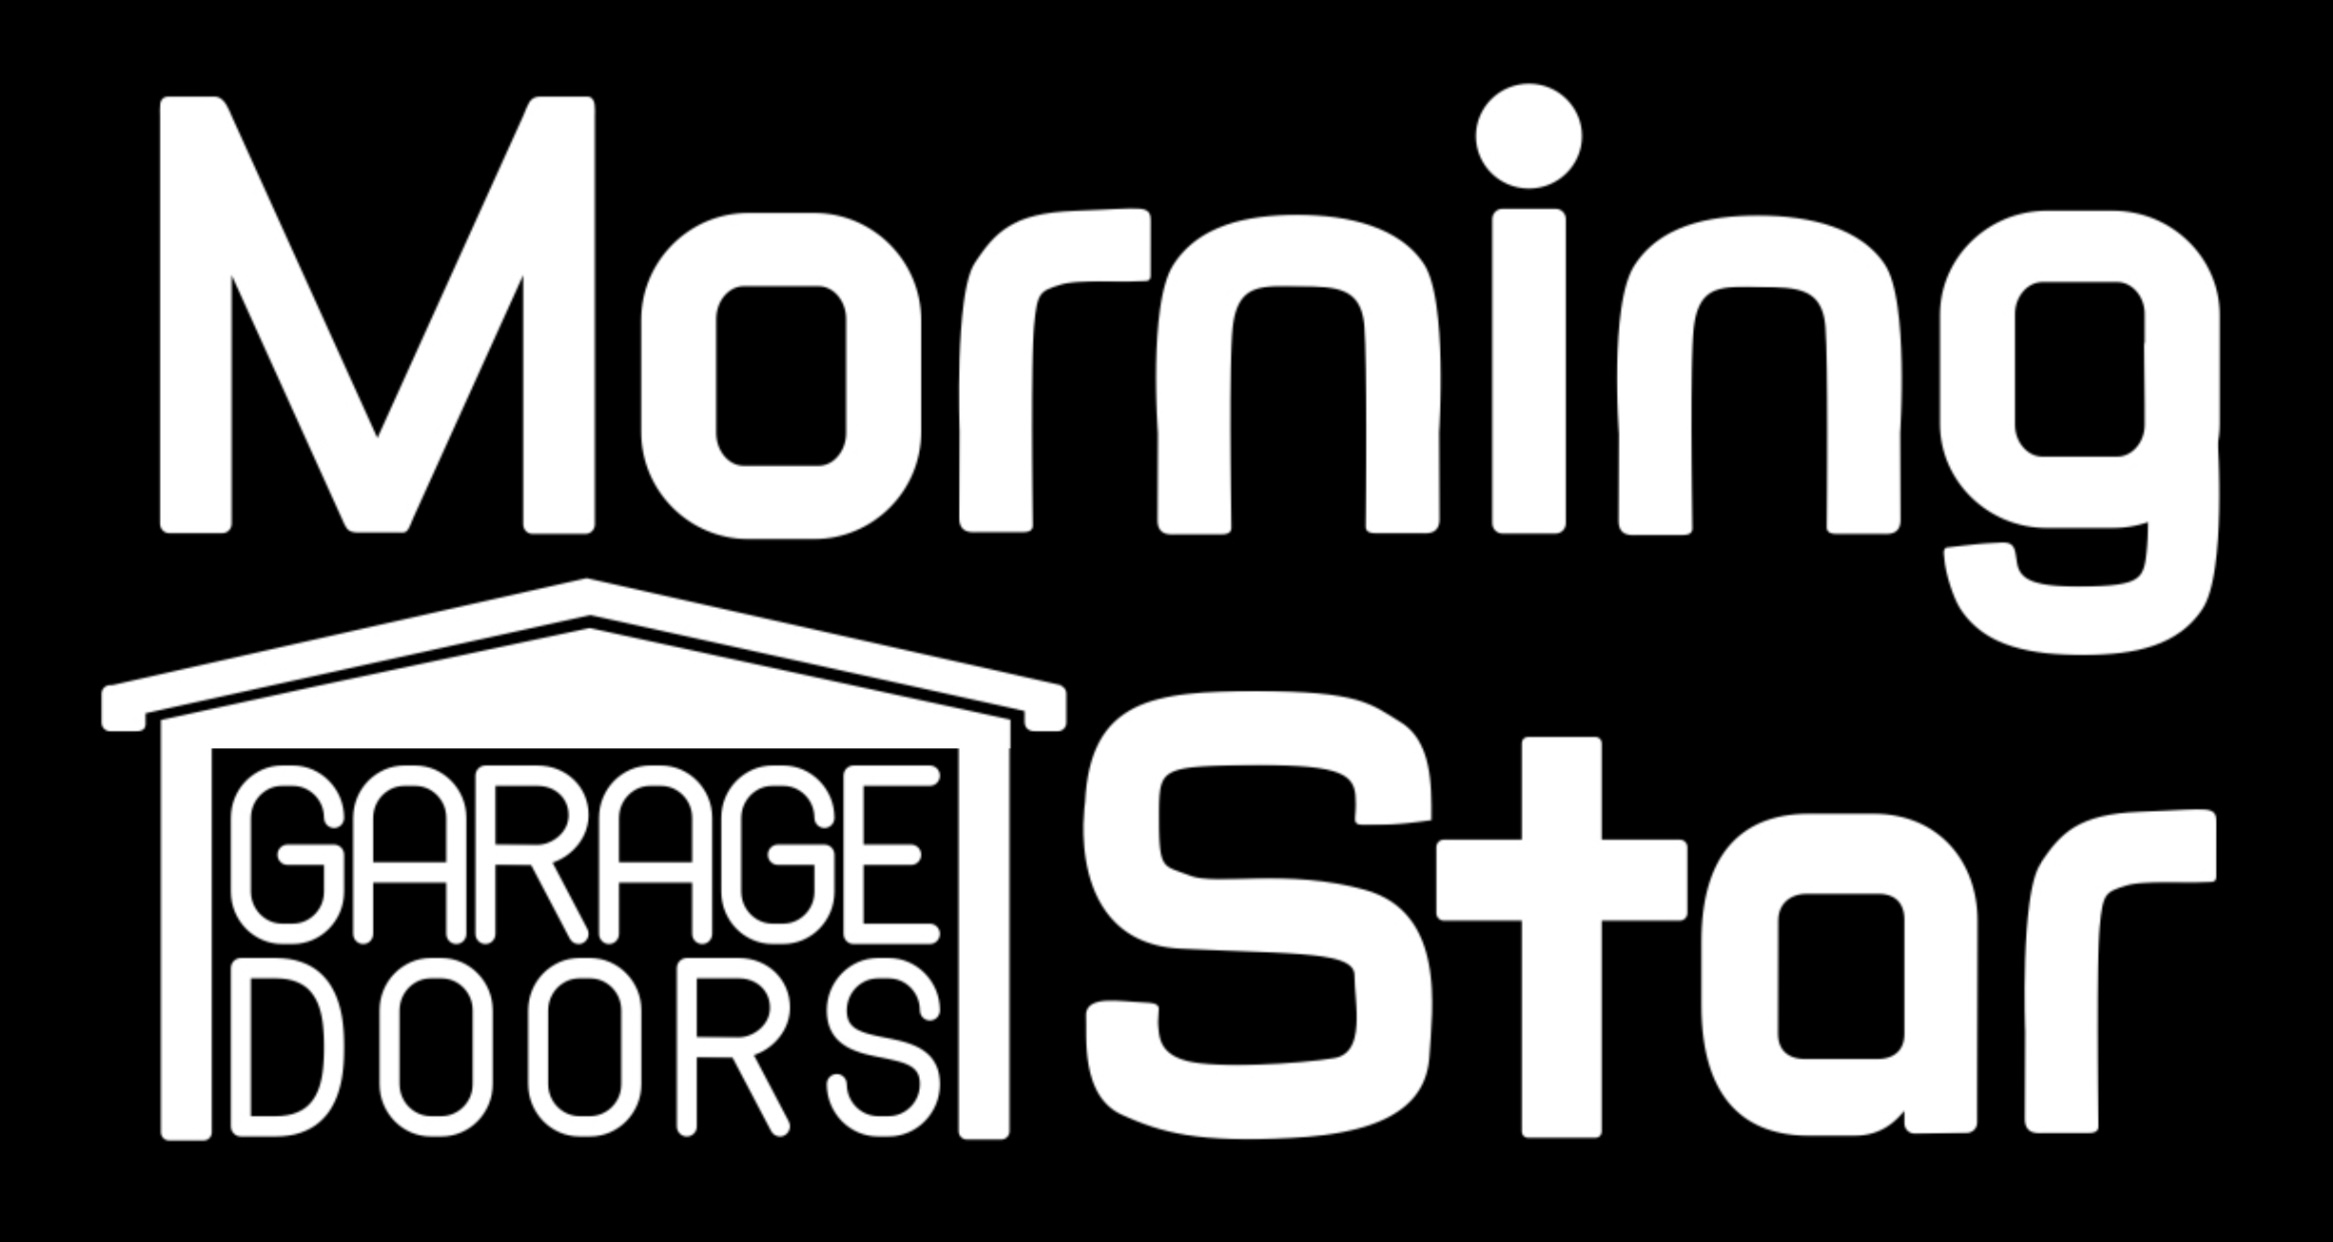 Morning Star Garage Doors LLC Logo